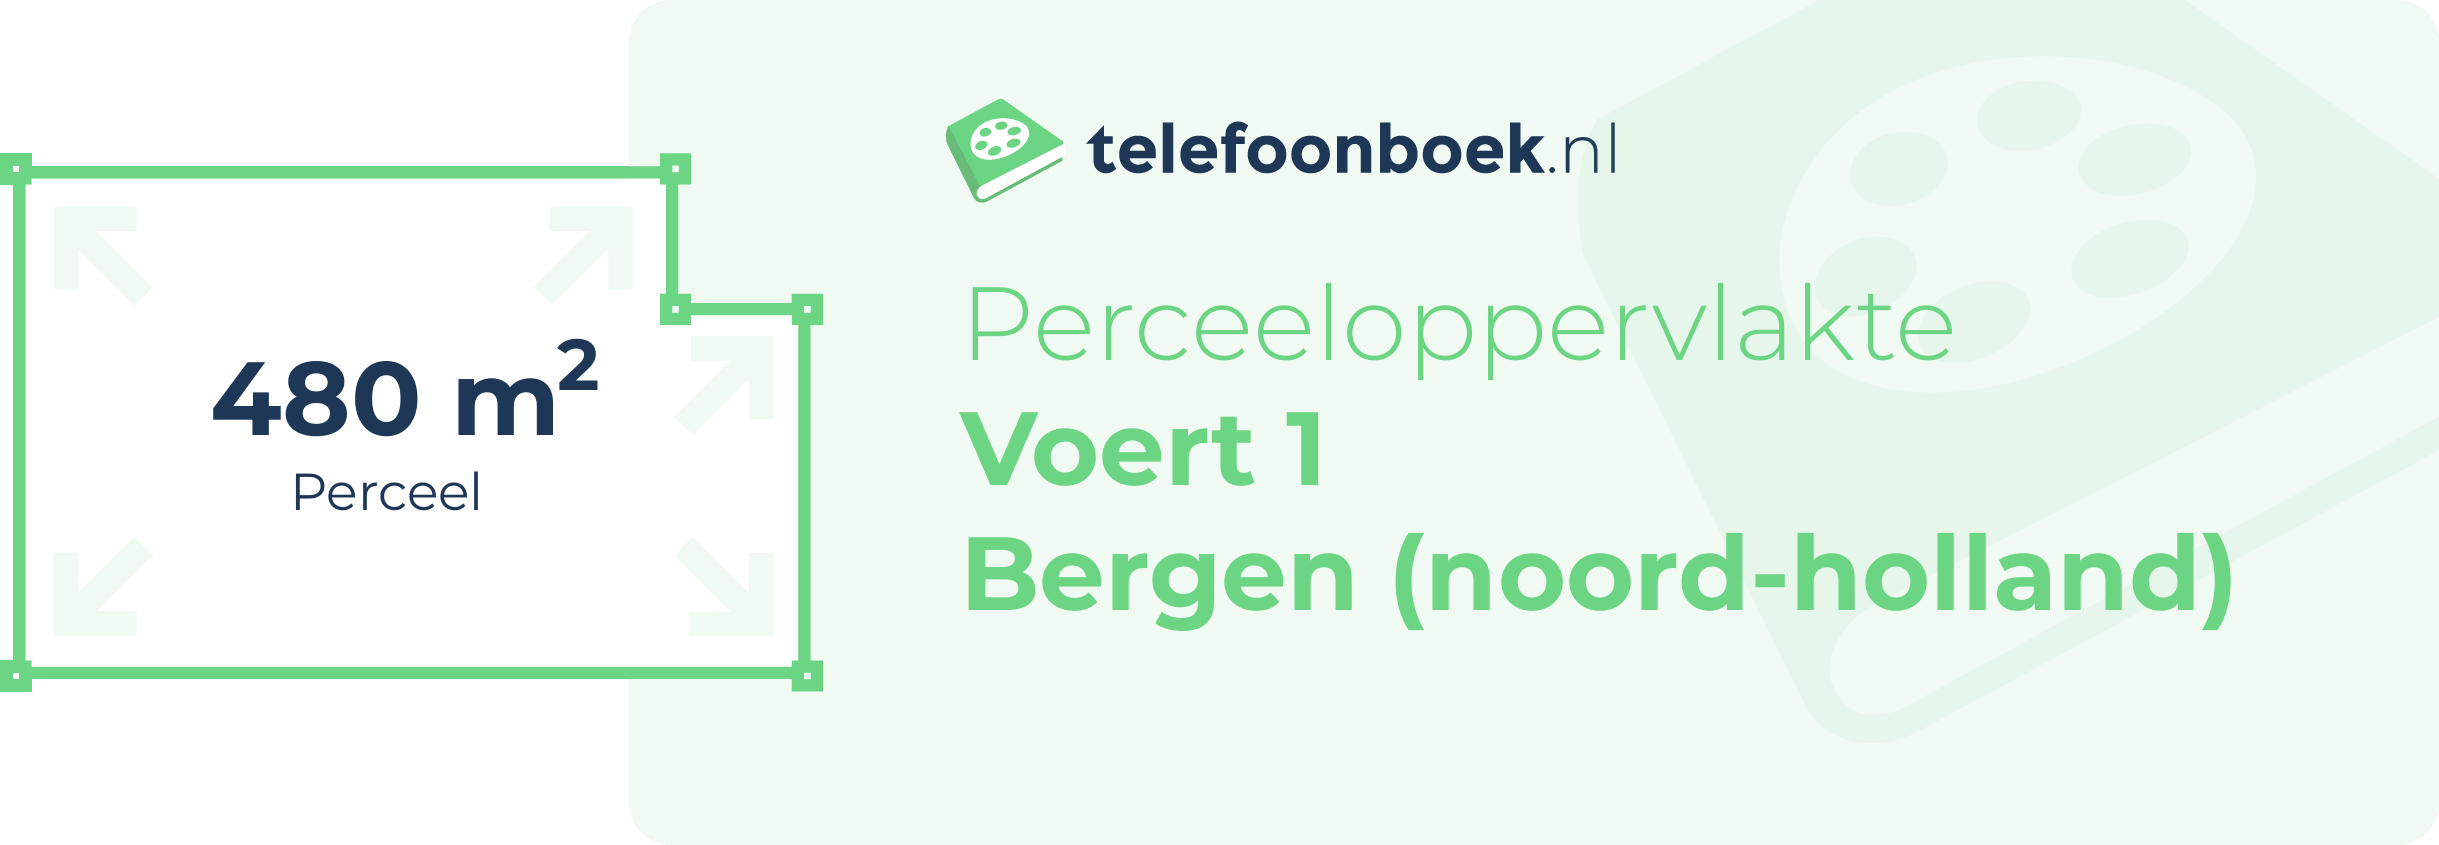 Perceeloppervlakte Voert 1 Bergen (Noord-Holland)